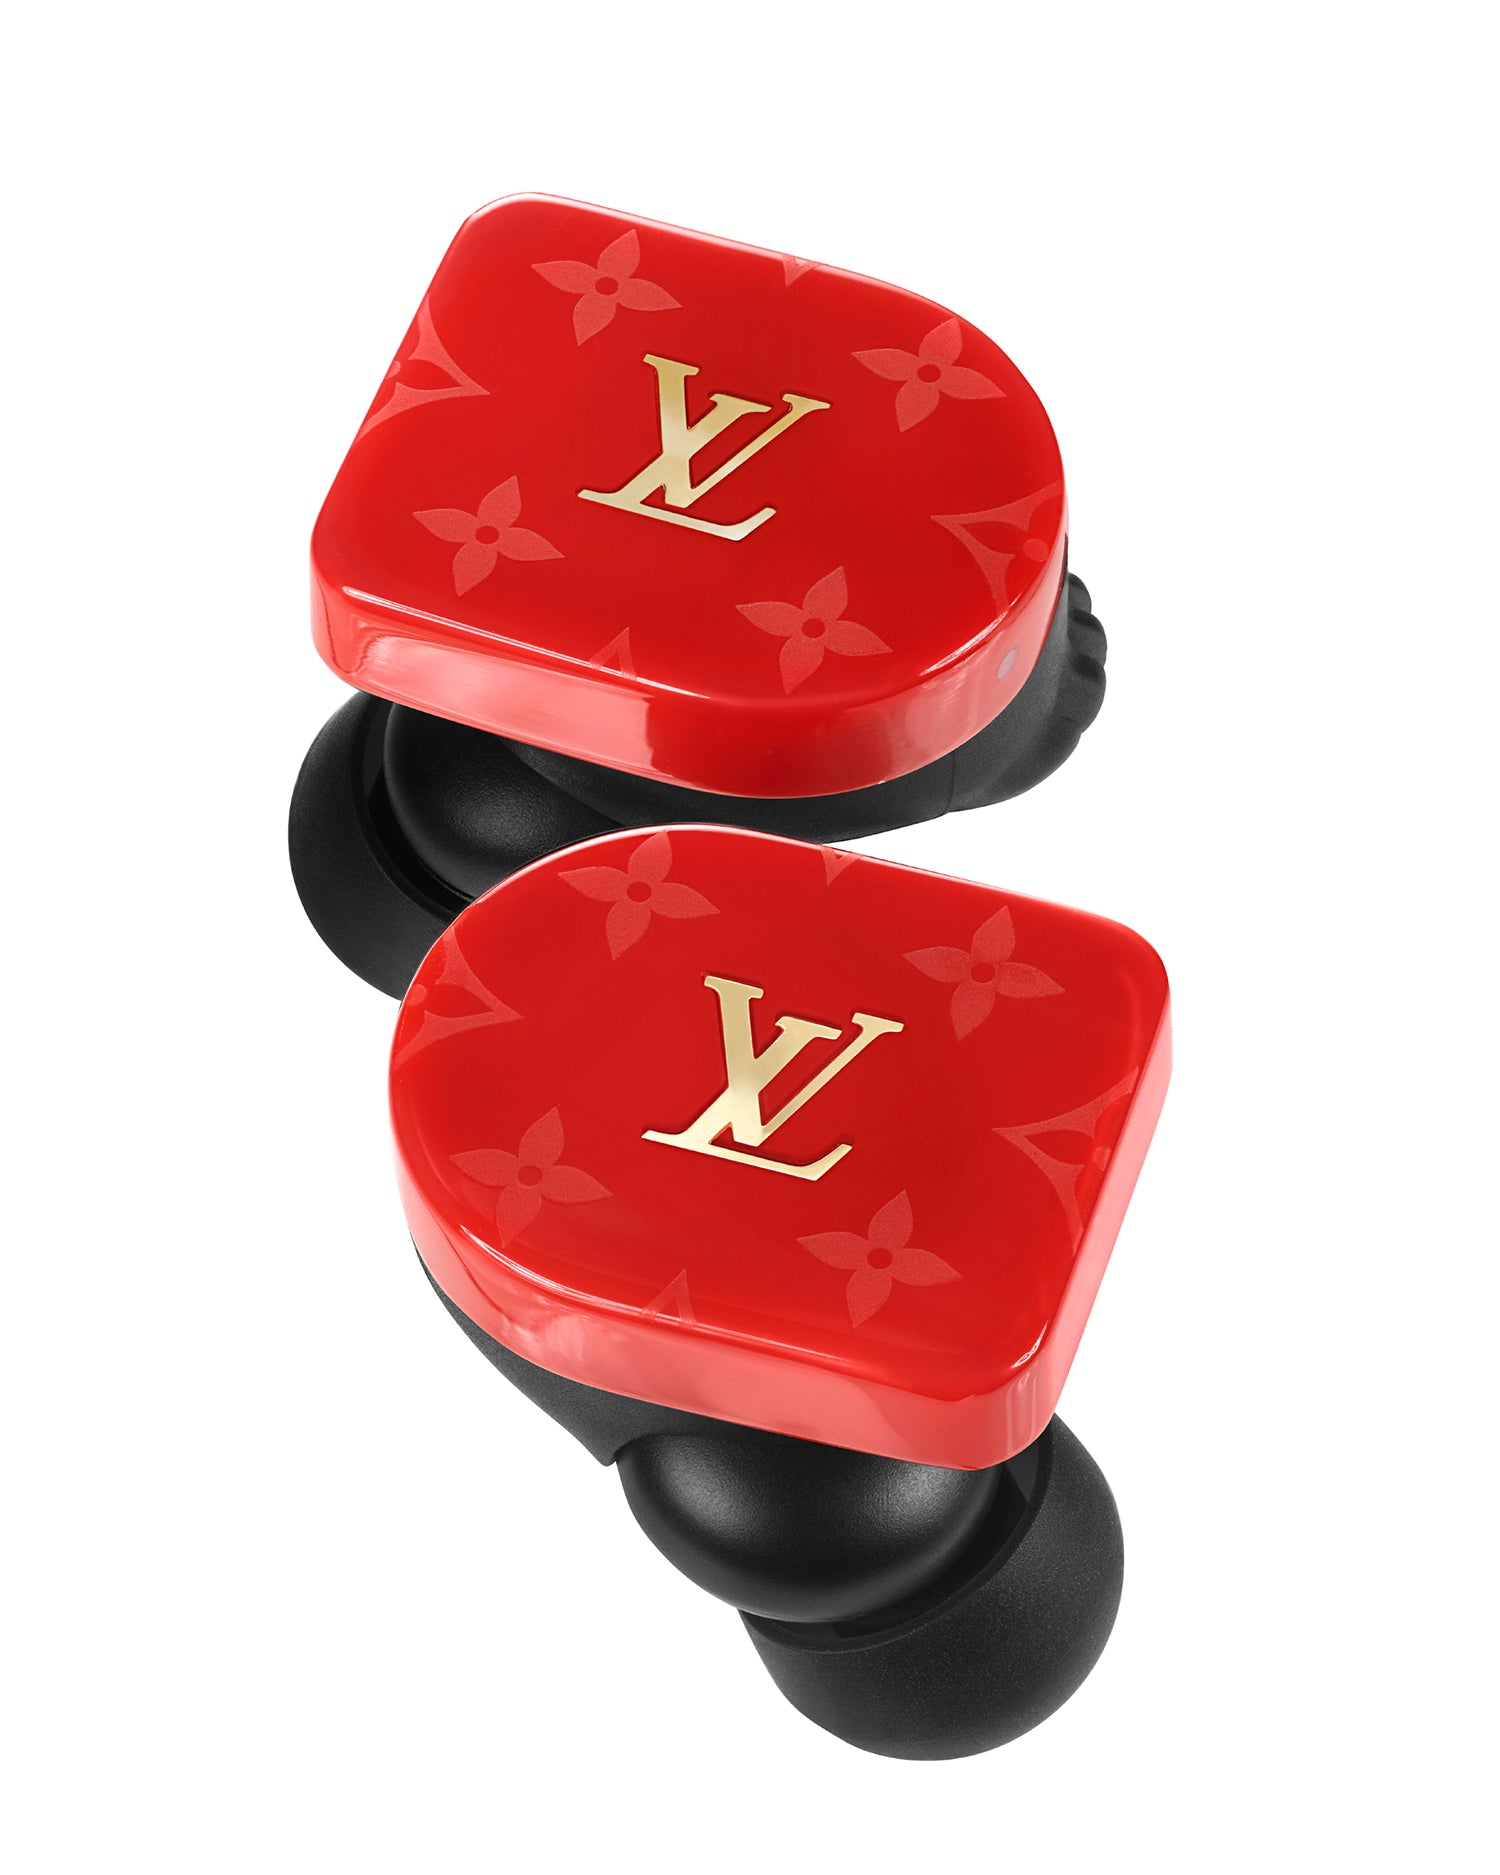 Louis Vuitton Earbuds Bluetooth Headphones